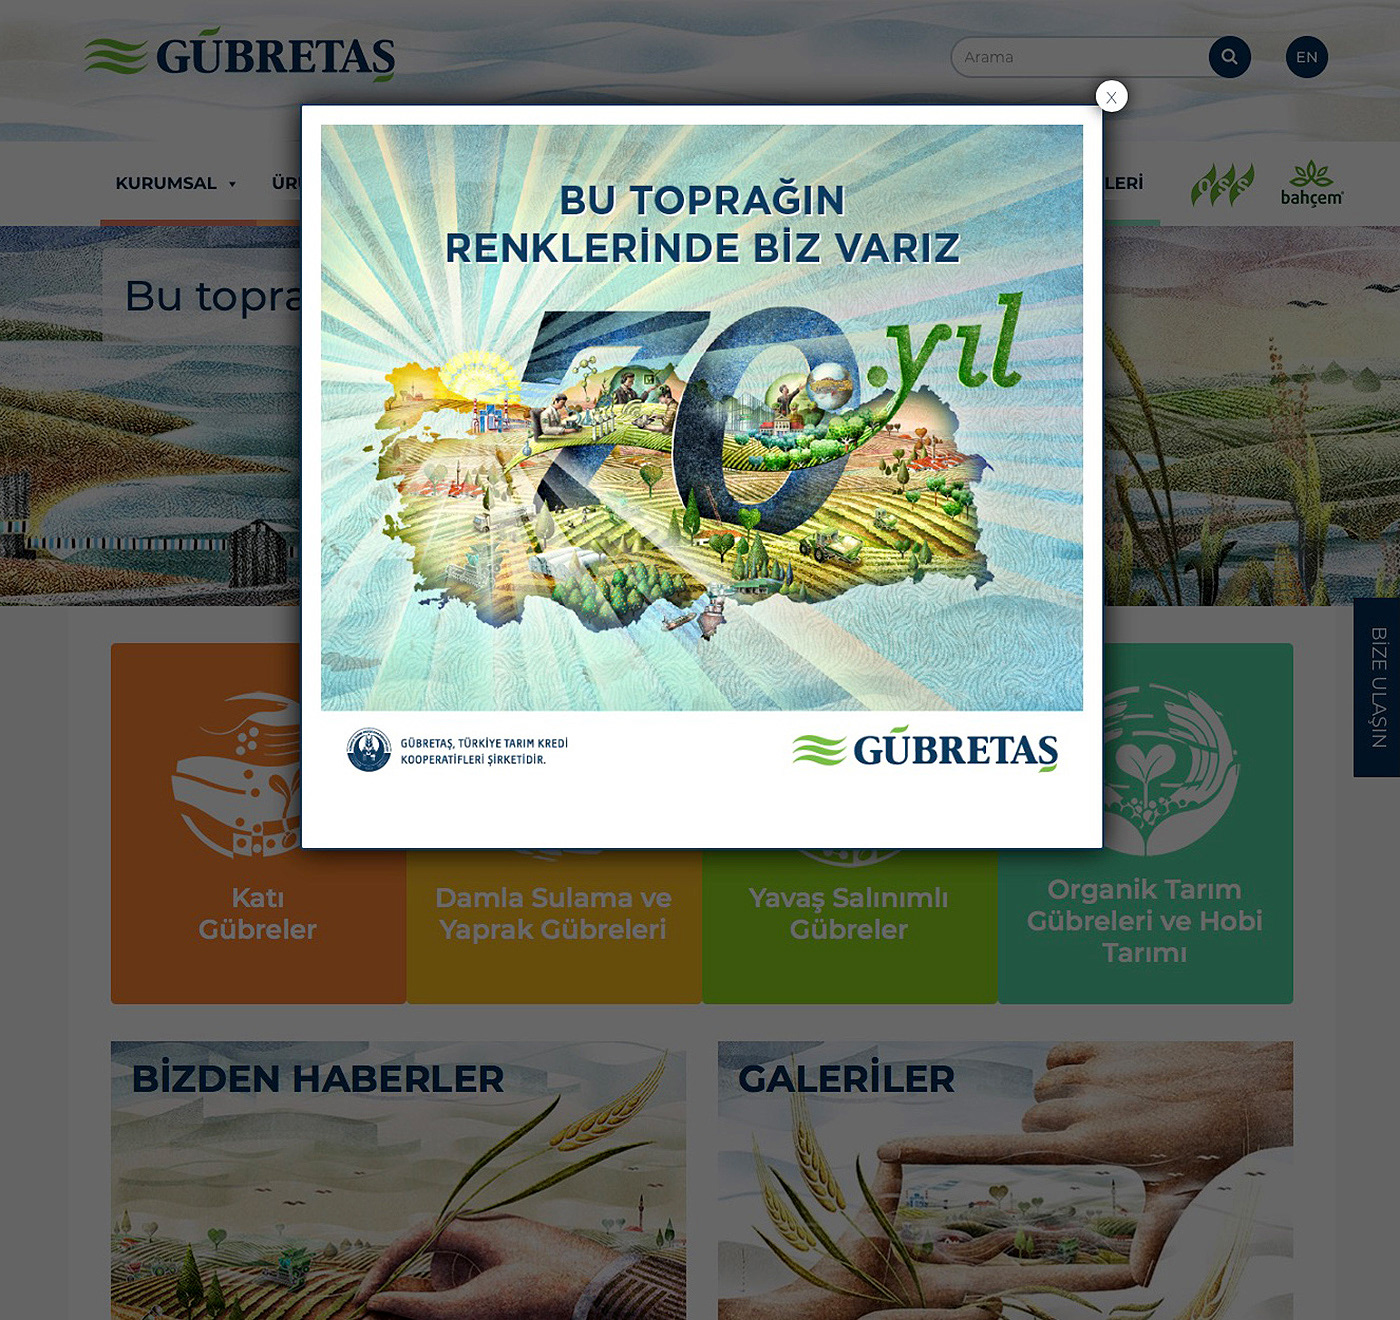 agriculture anniversary annual report Commemorative corporate fertilizers Gübretas Landscape map Turkey